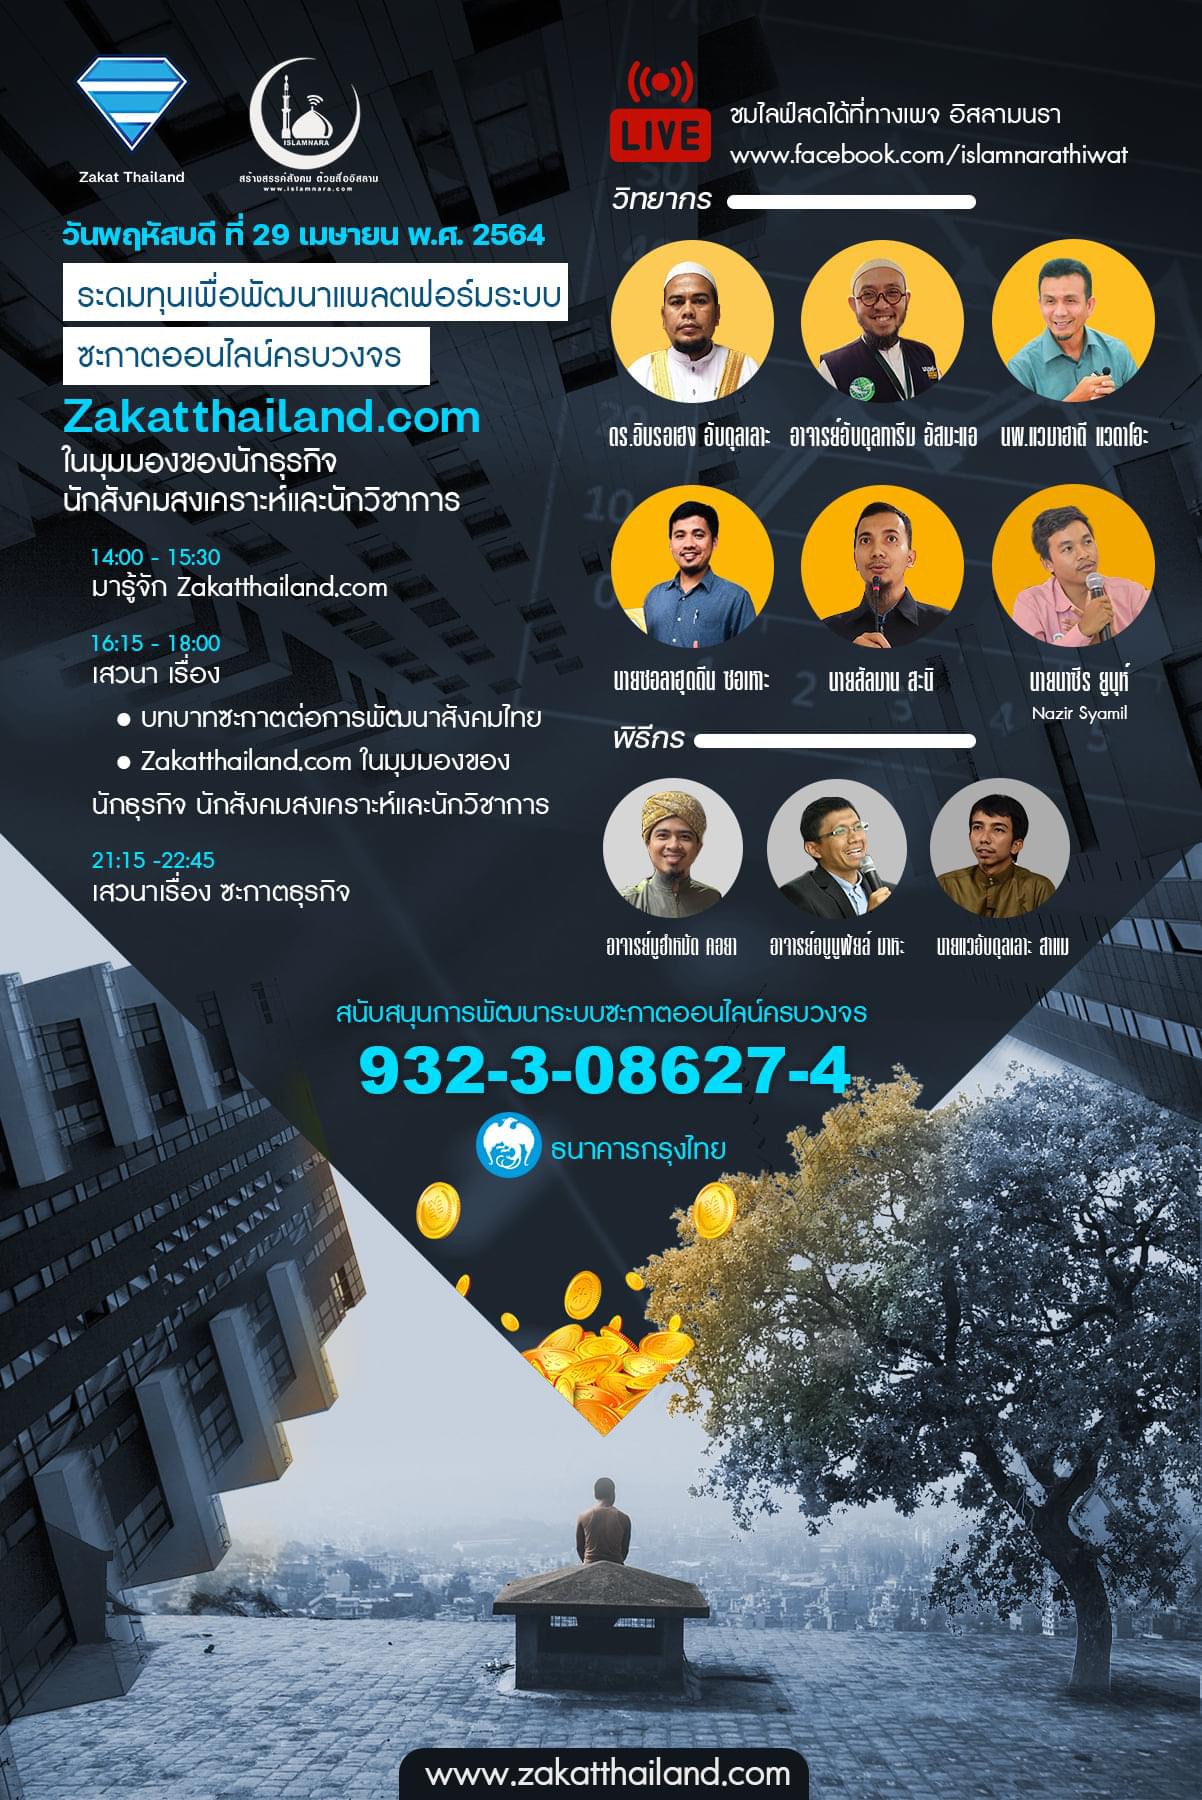 Zakatthailand.com ในมุมมองของนักธุรกิจ นักสังคมสงเคราะห์และนักวิชาการ